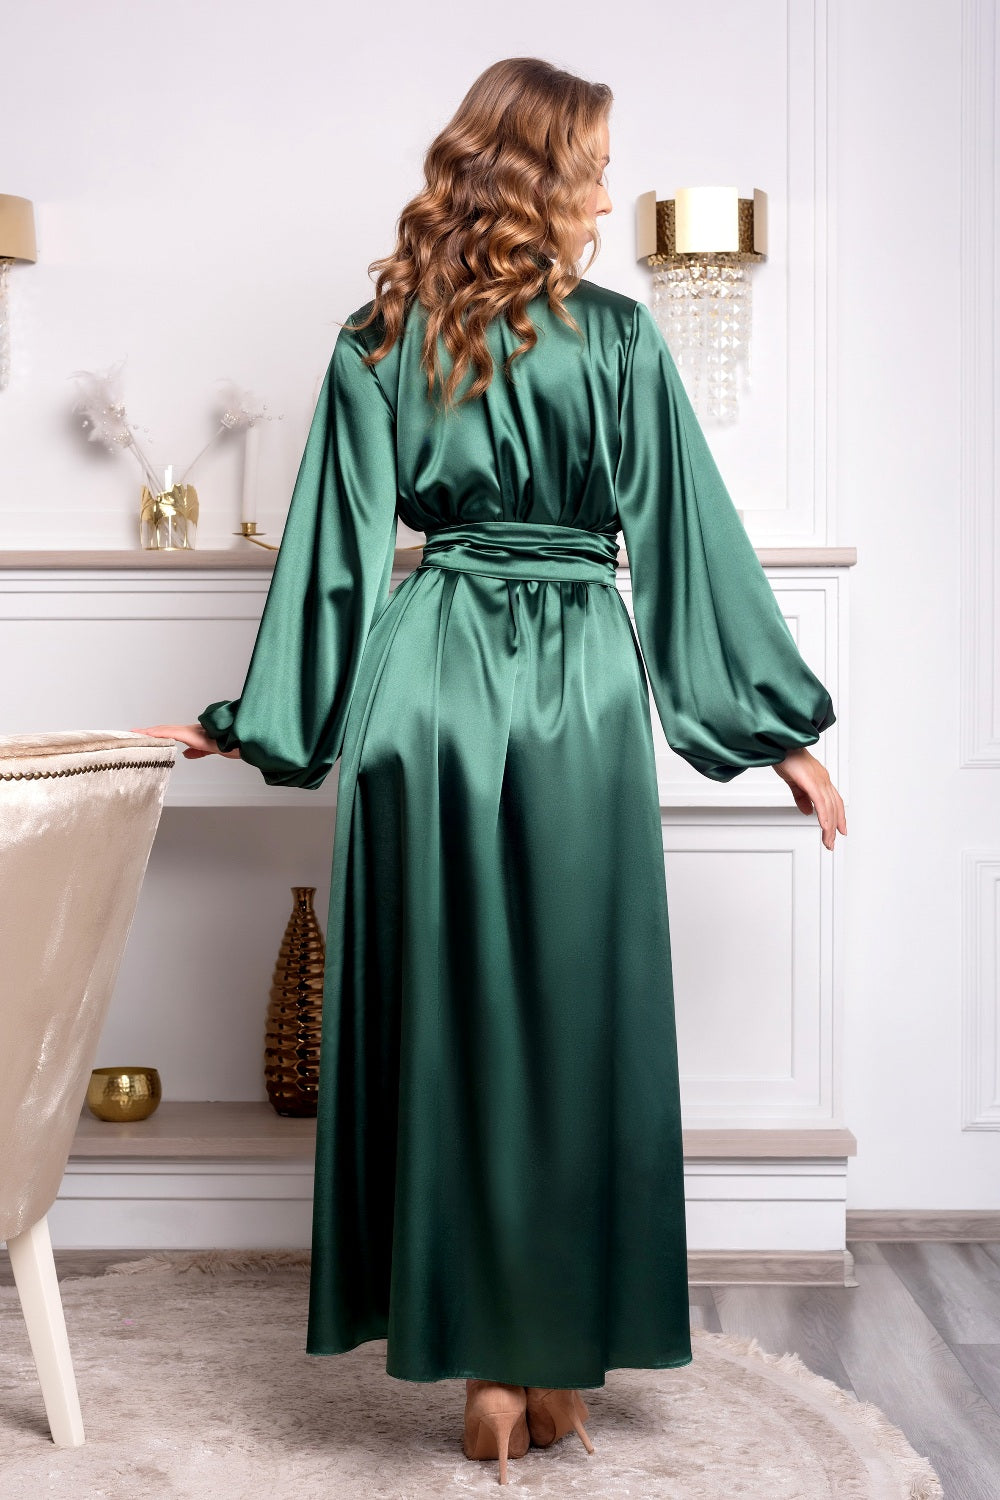 Bridesmaid Luxury: Dark Green Satin Long Robe in All Its Glory